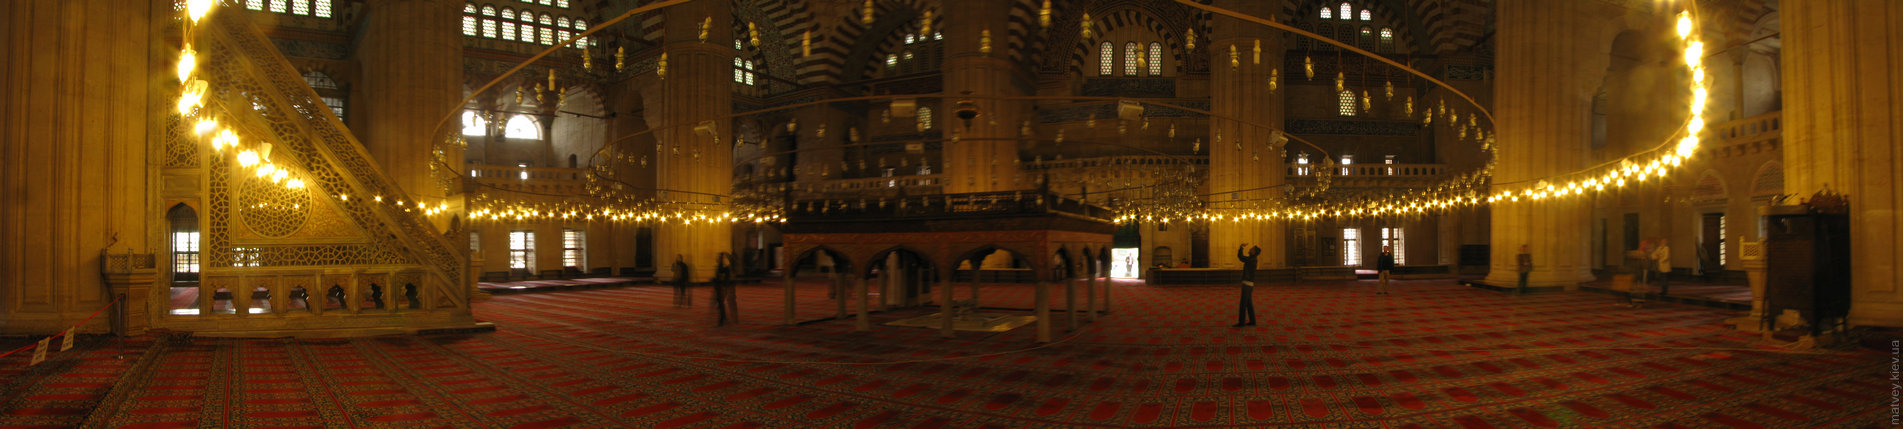 Панорама внутри мечети Селимие. Эдирне, Турция